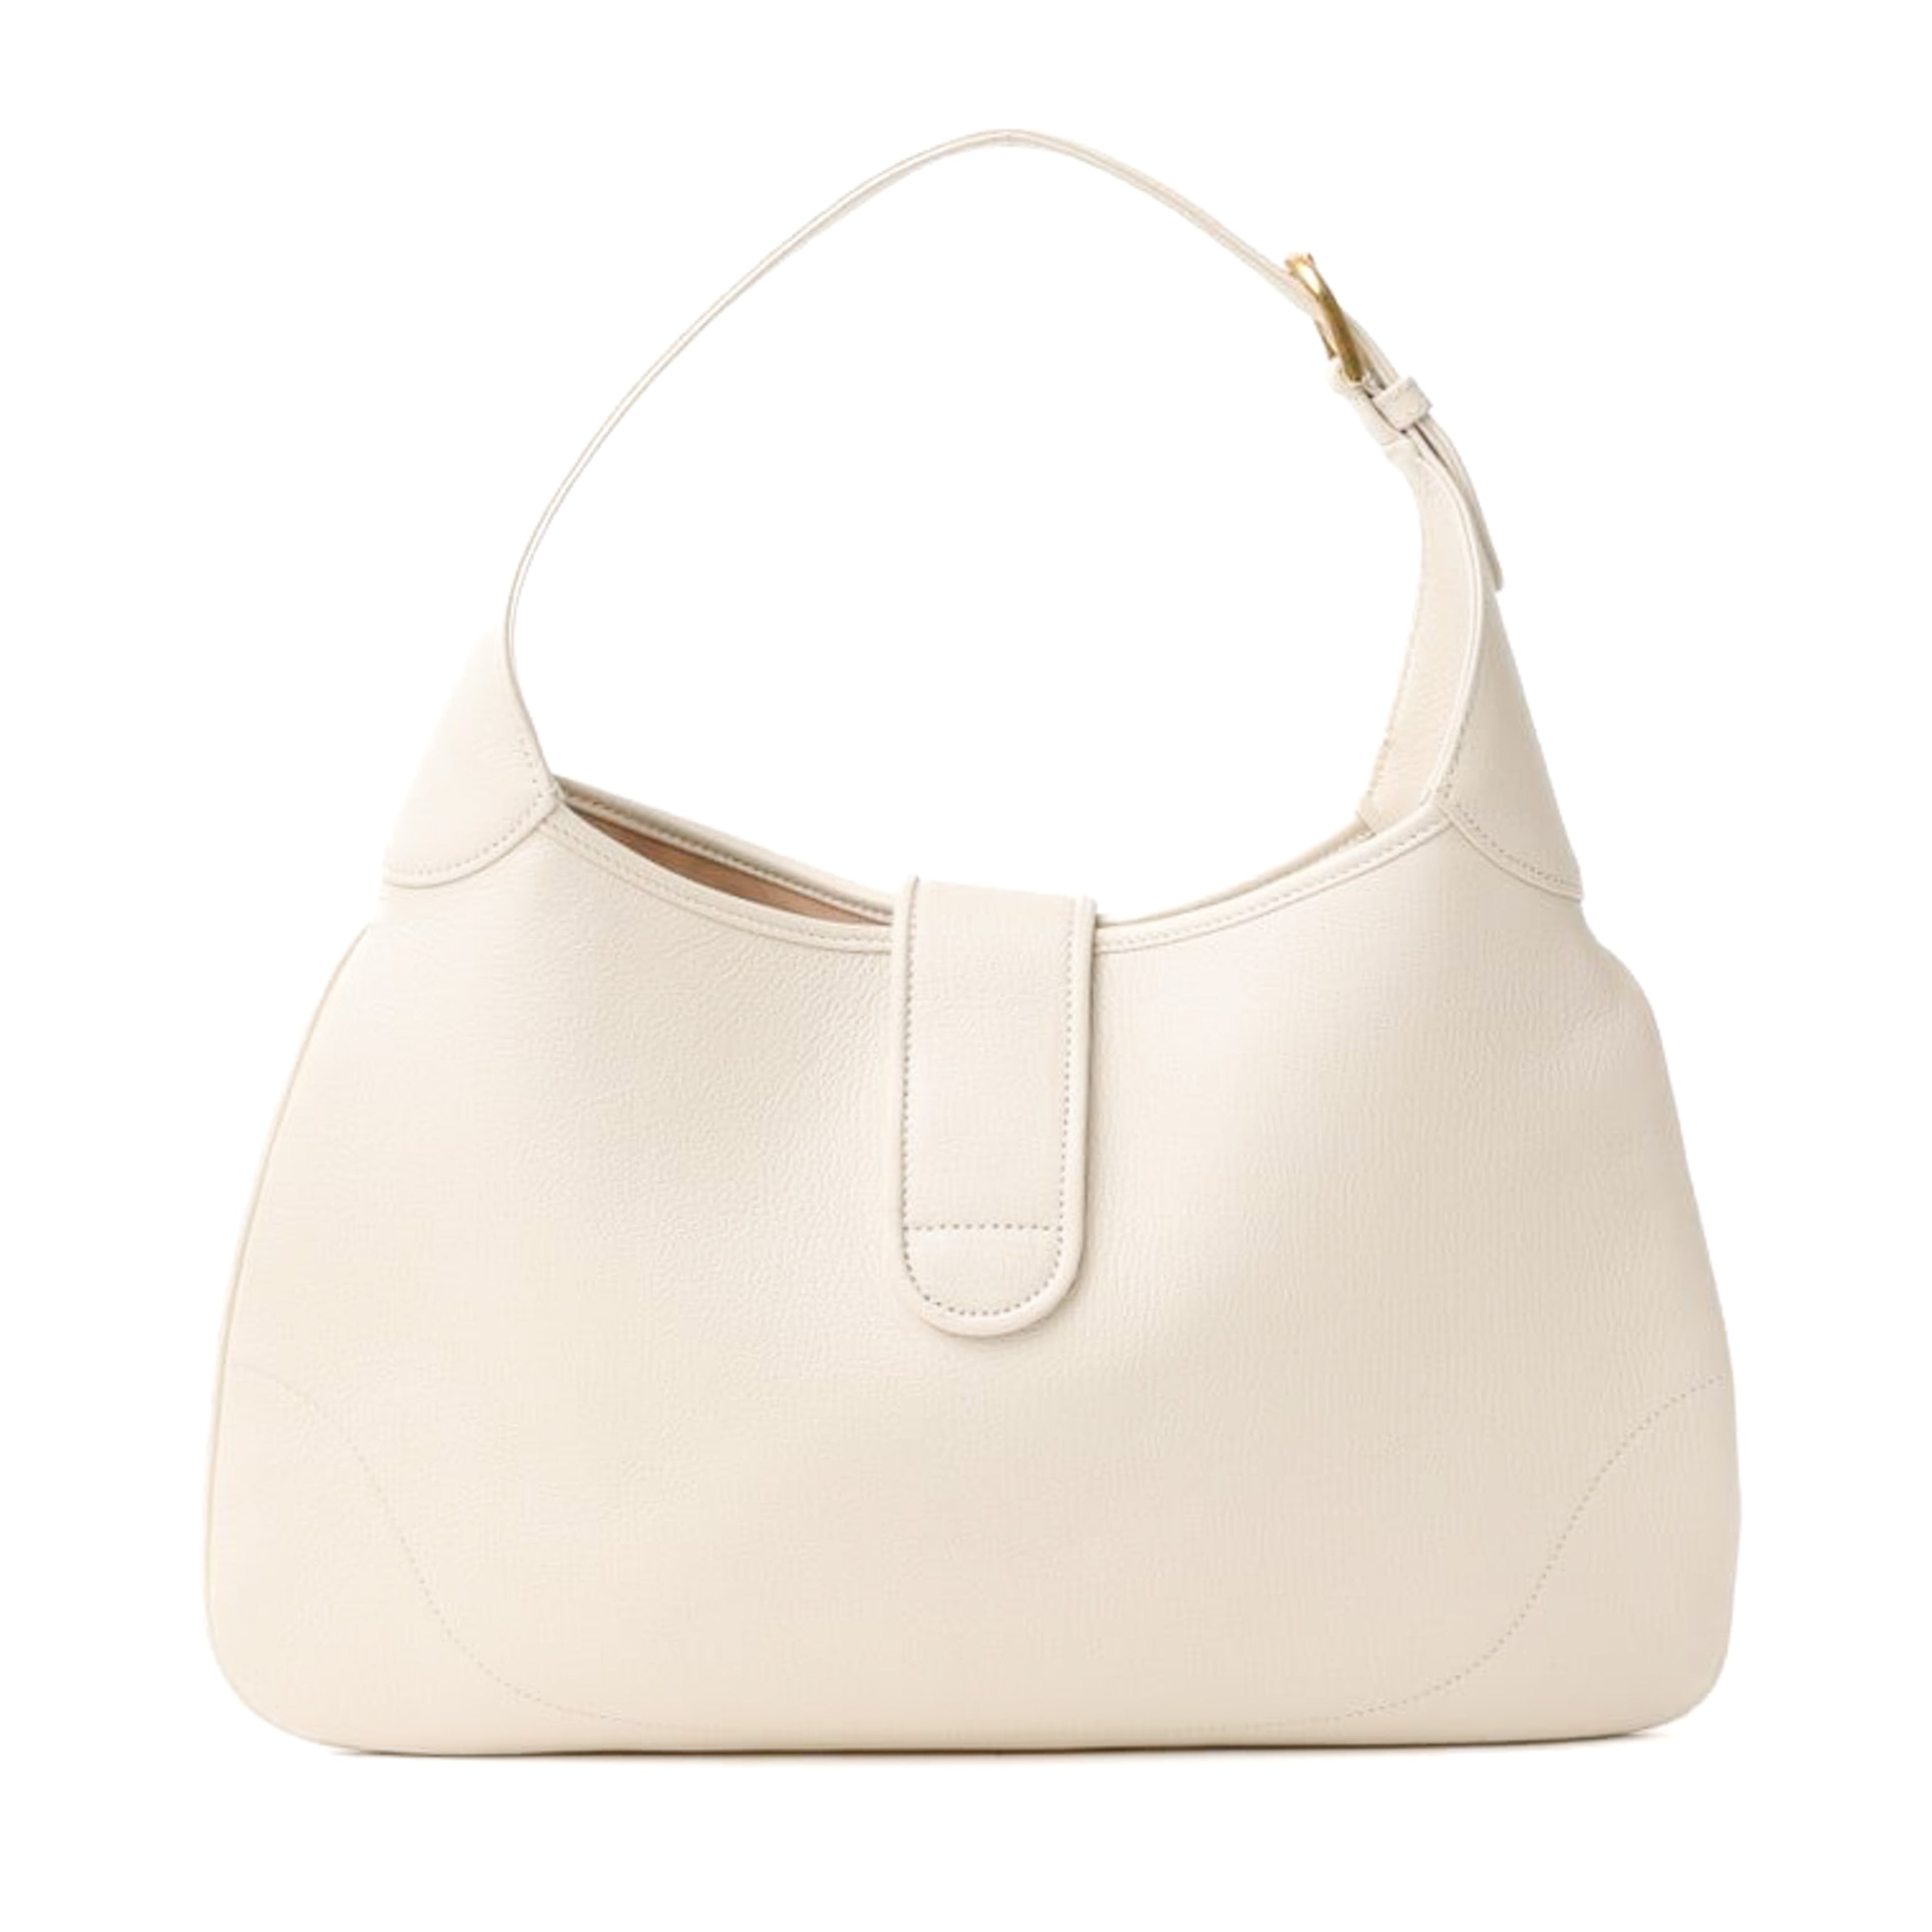 GUCCI Gucci Aphrodite Medium Shoulder Bag in White - Vault 55